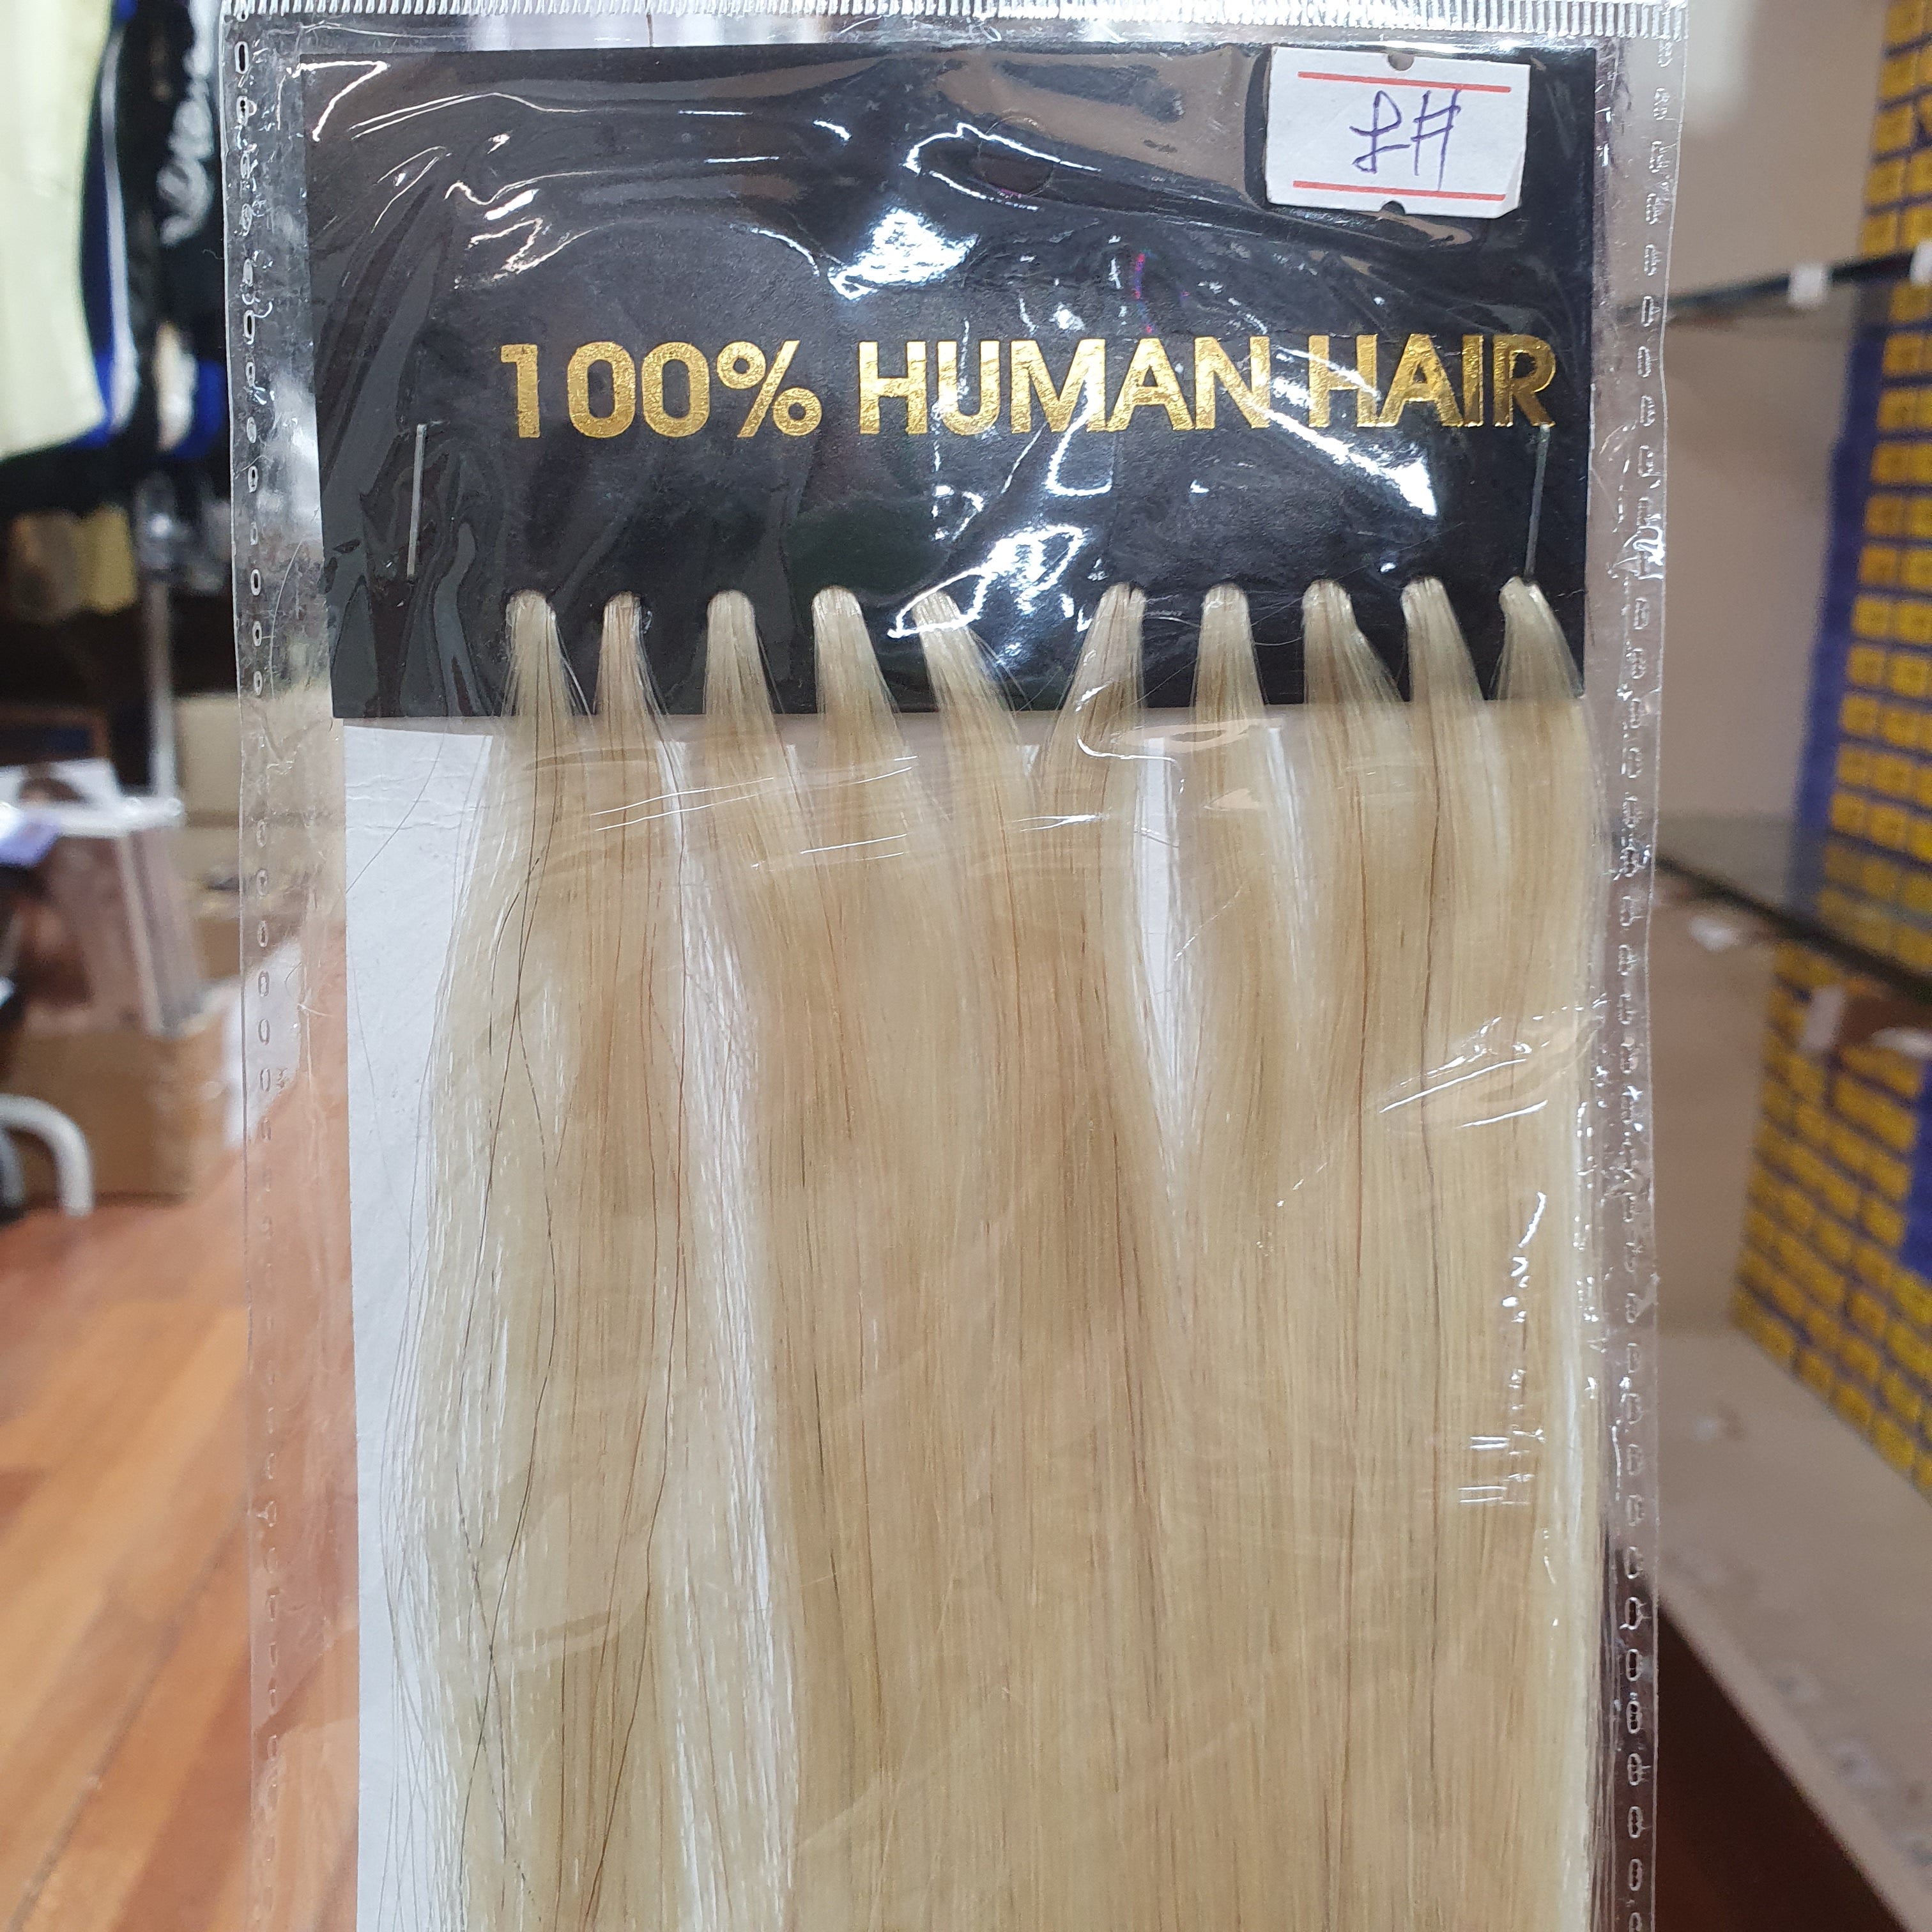 100% HUMAN HAIR EXTENSION 10/PKG